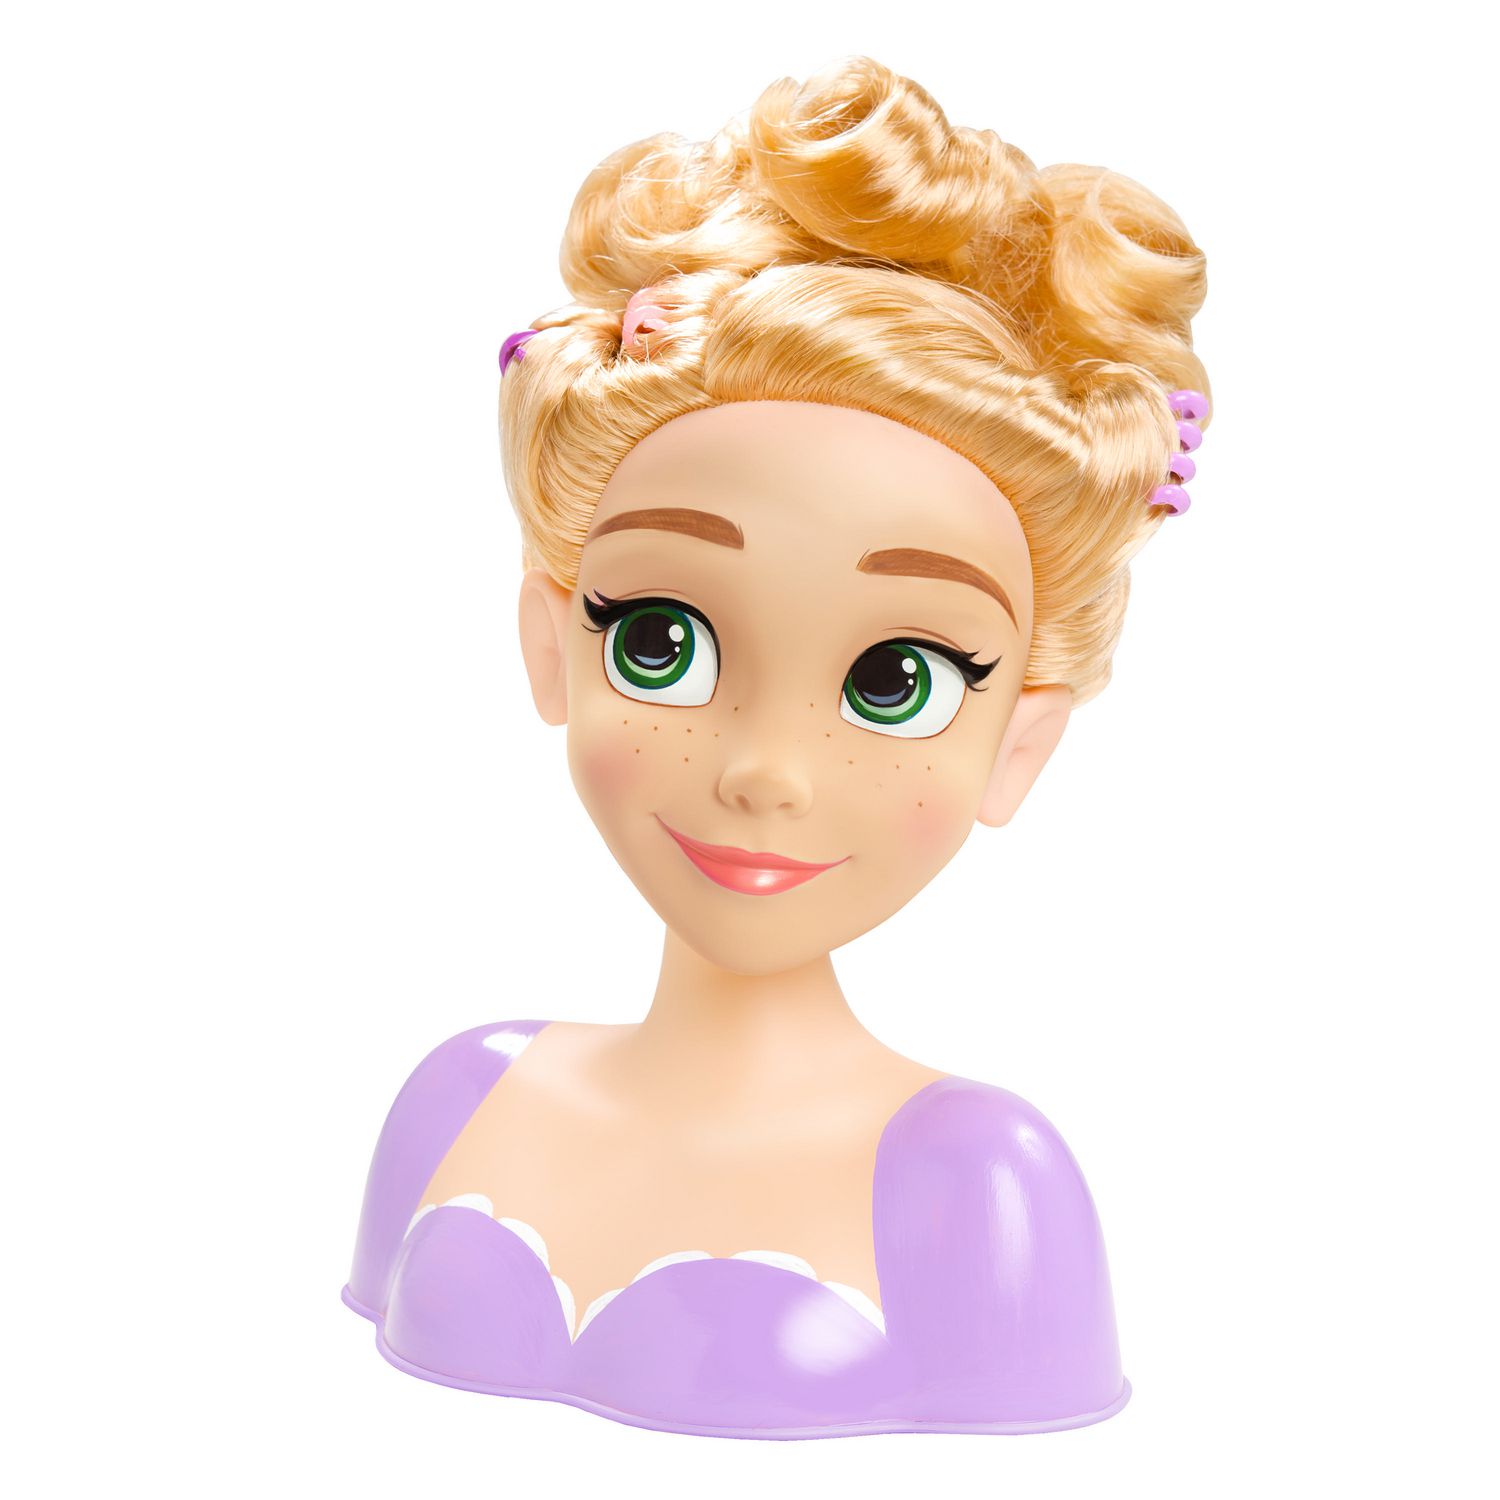 Rapunzel | Rapunzel hair, Long hair styles, Hair styles